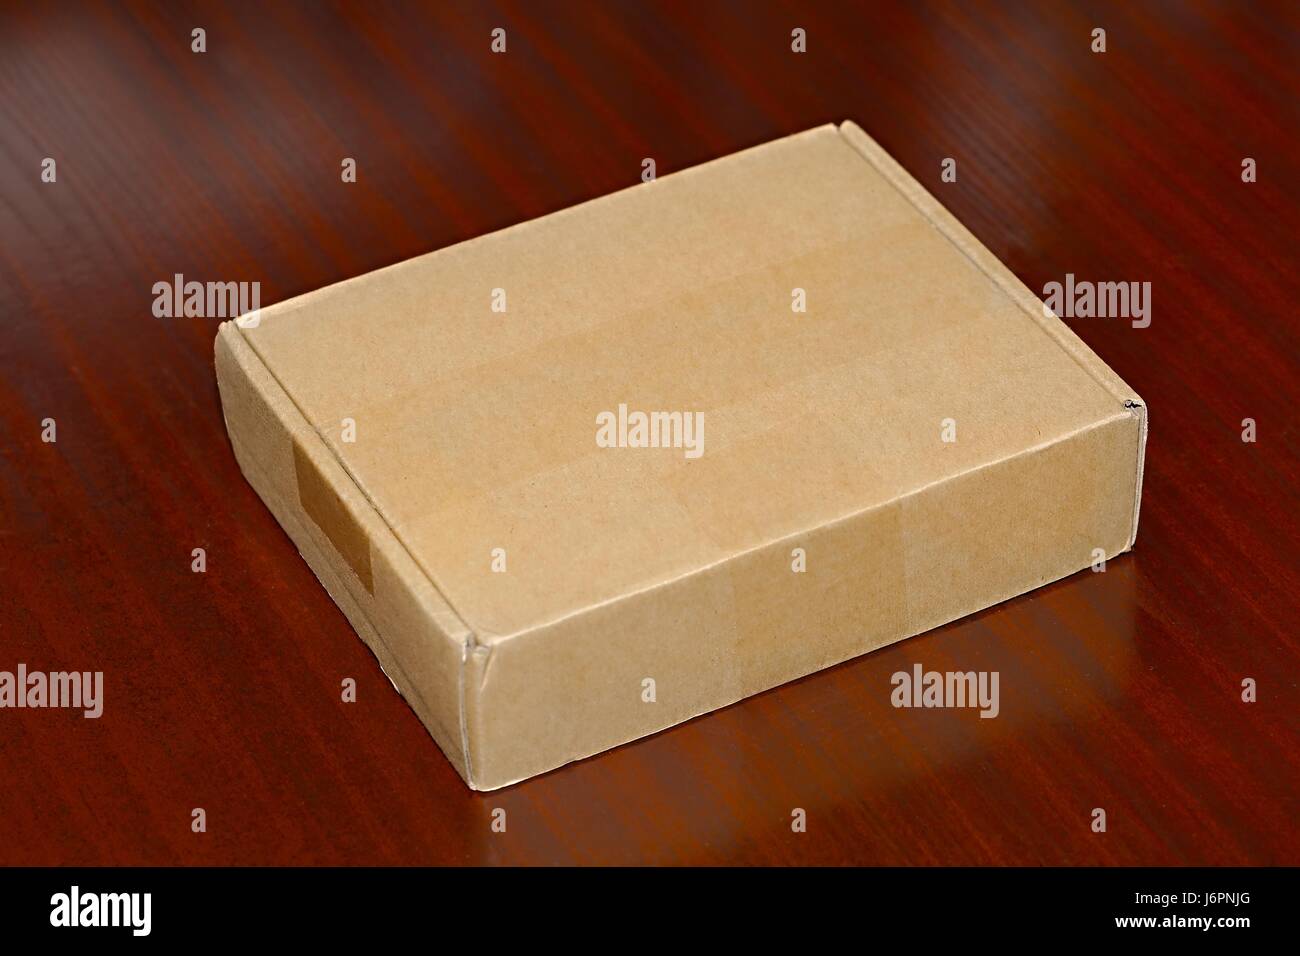 Open cardboard box on a desk Stock Photo